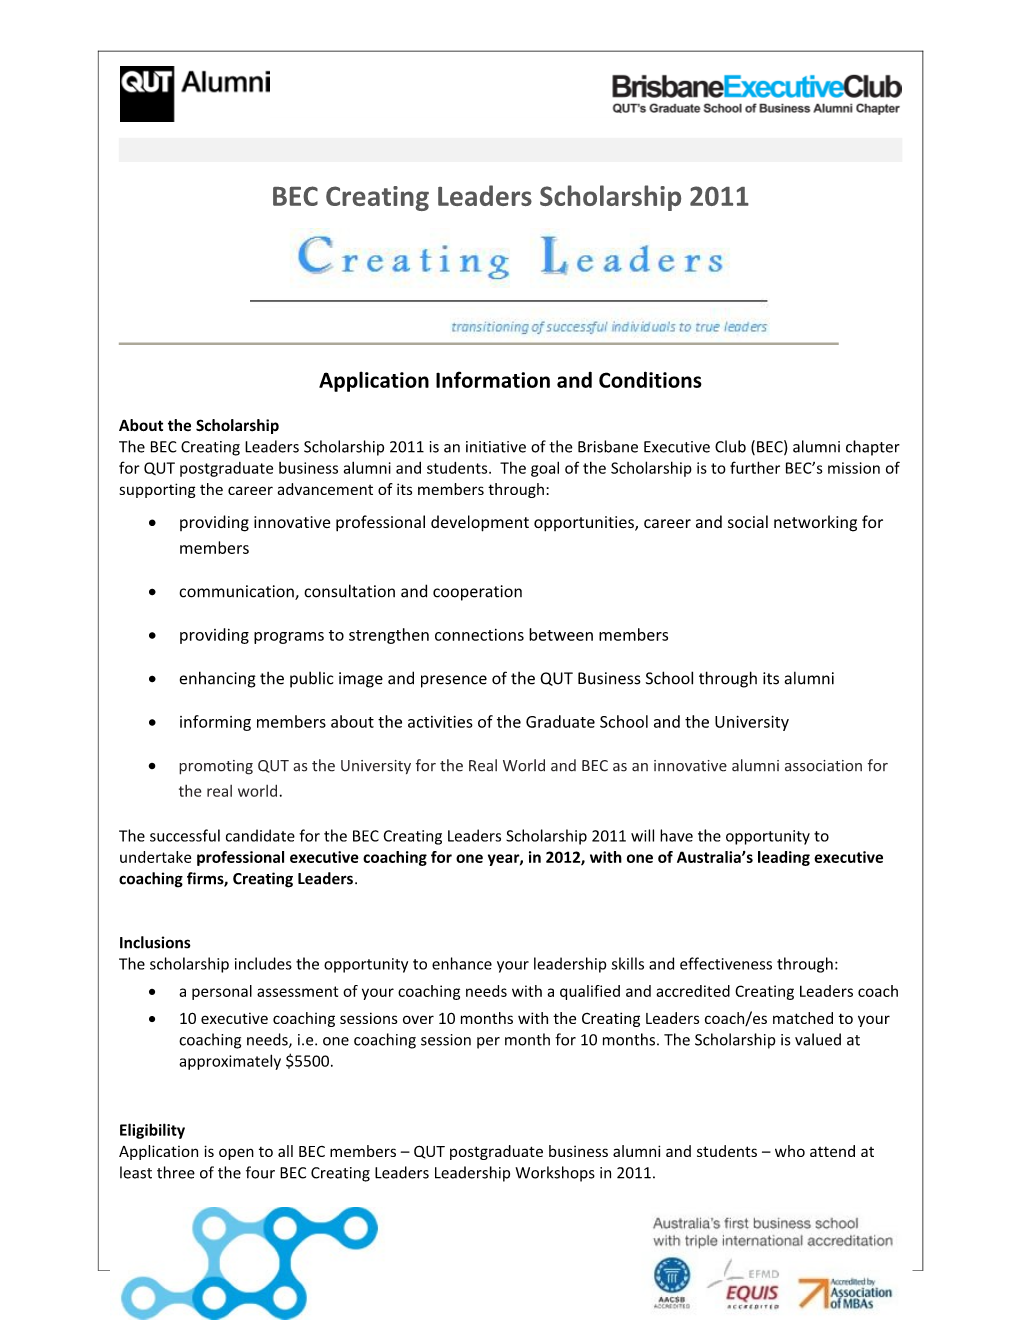 BEC Creating Leaders Scholarships 2011